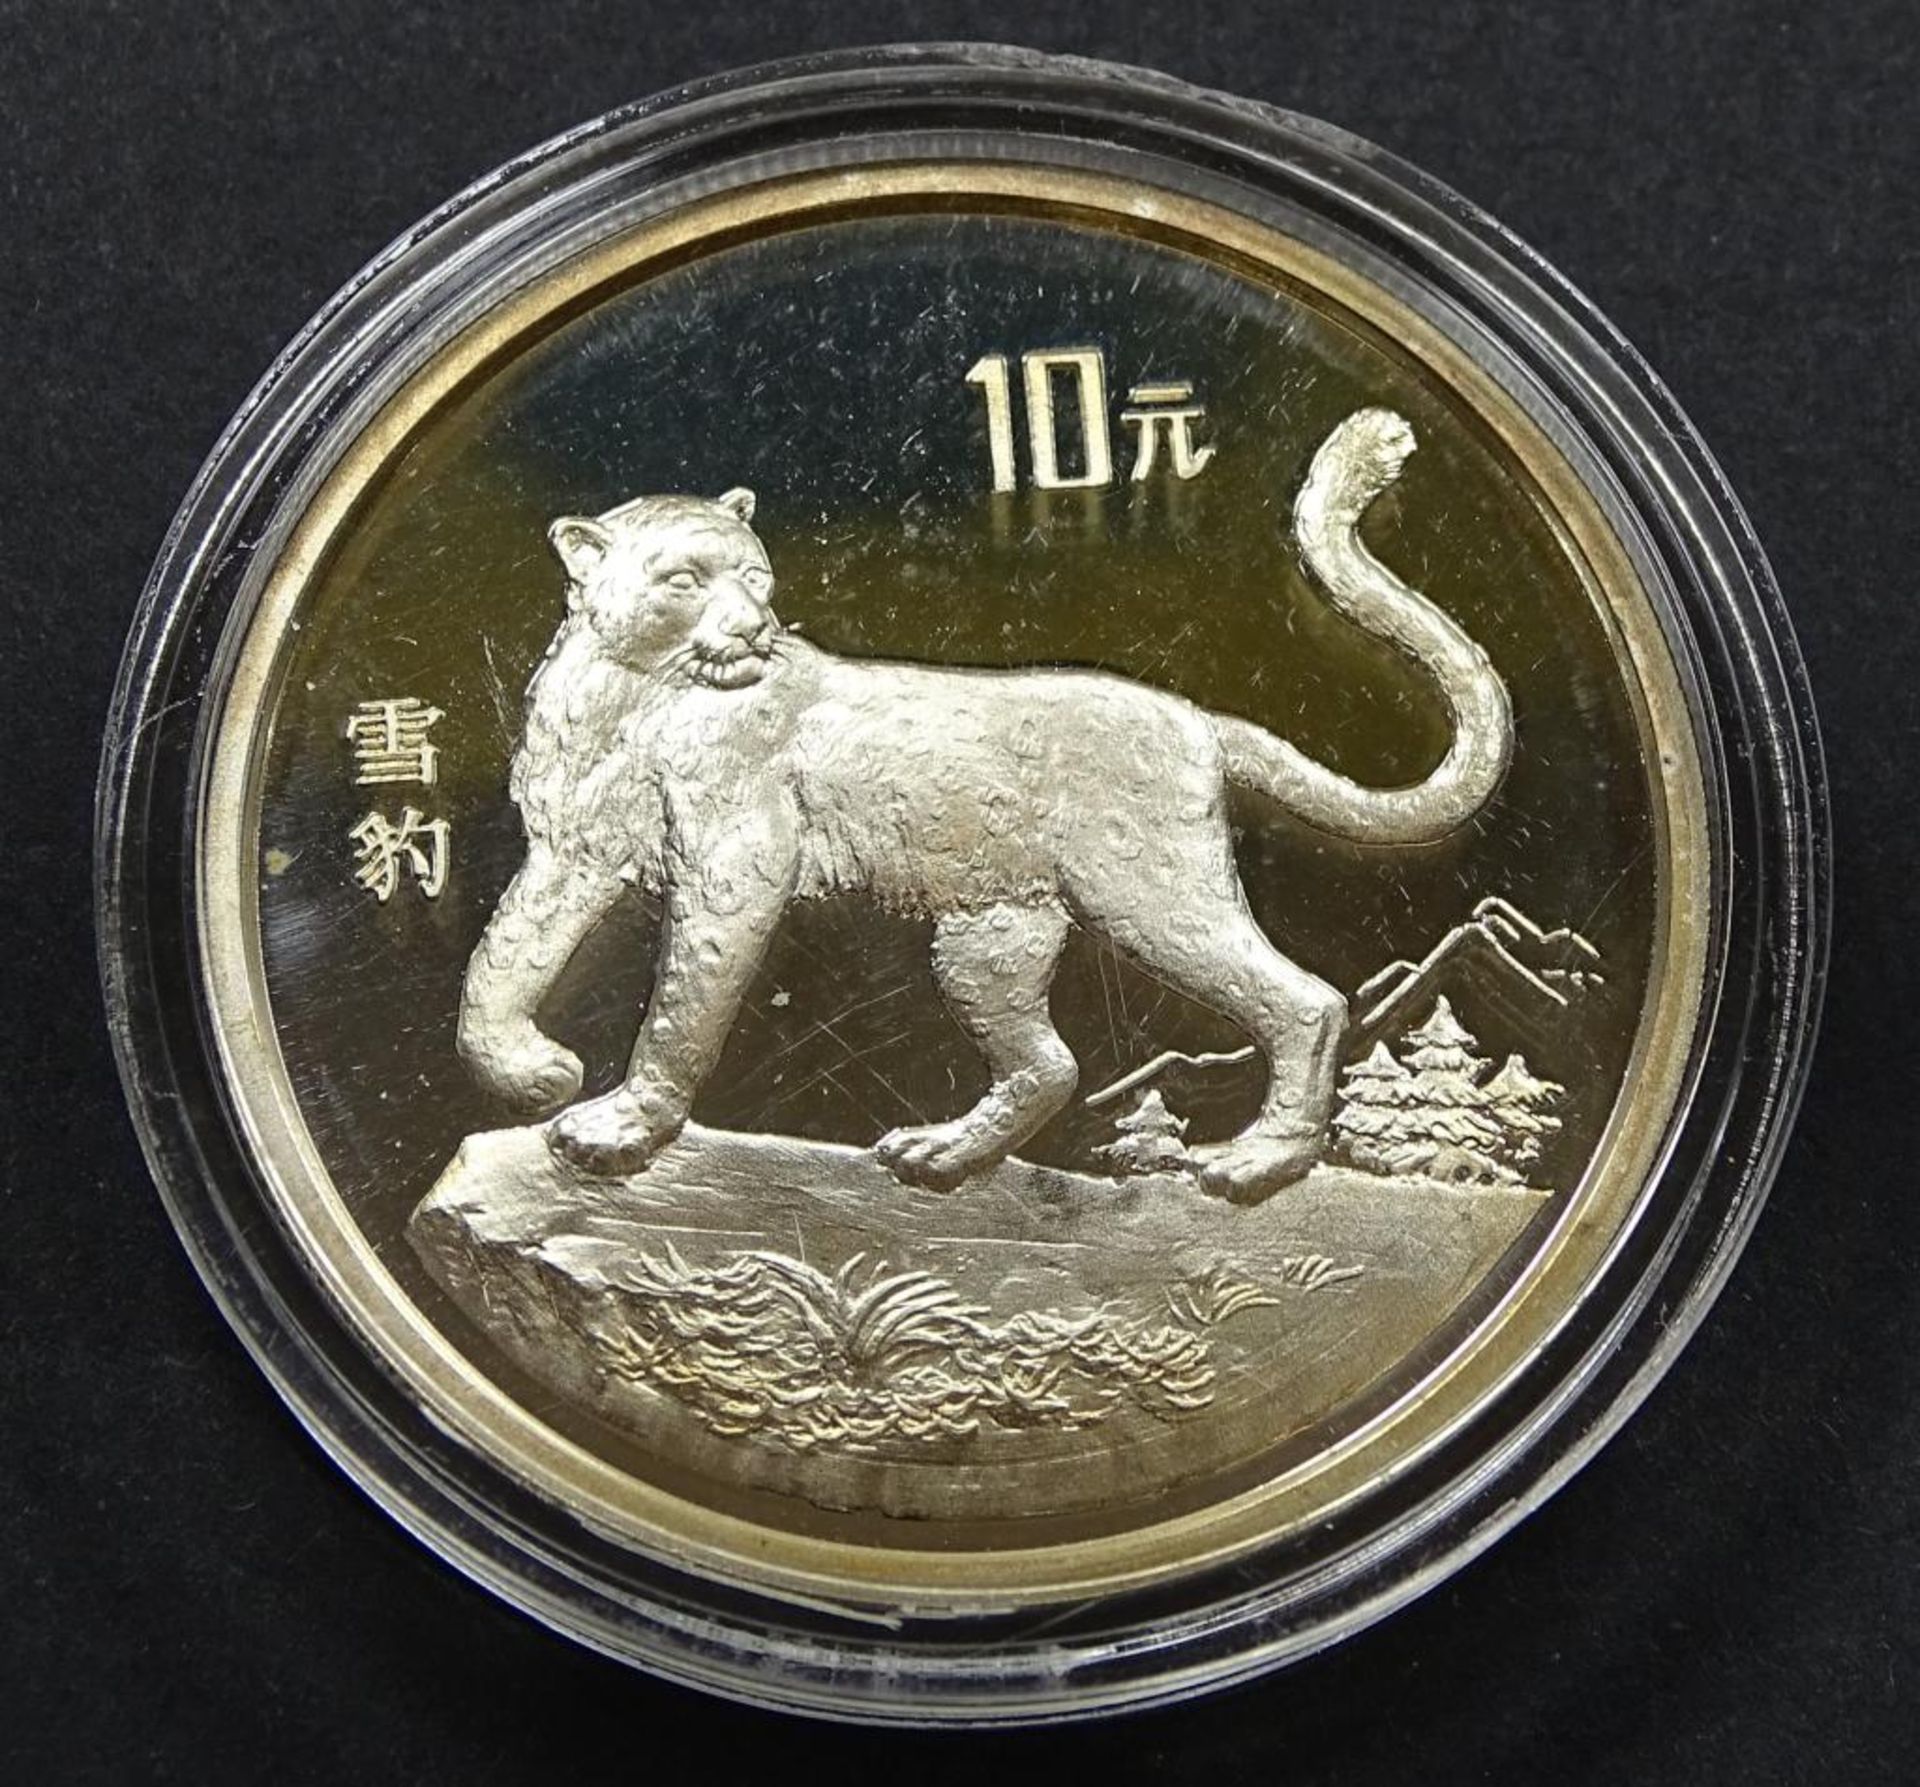 10 yuan,China, 1992, Silber, in Kapsel,d-38mm, 26,8gr.